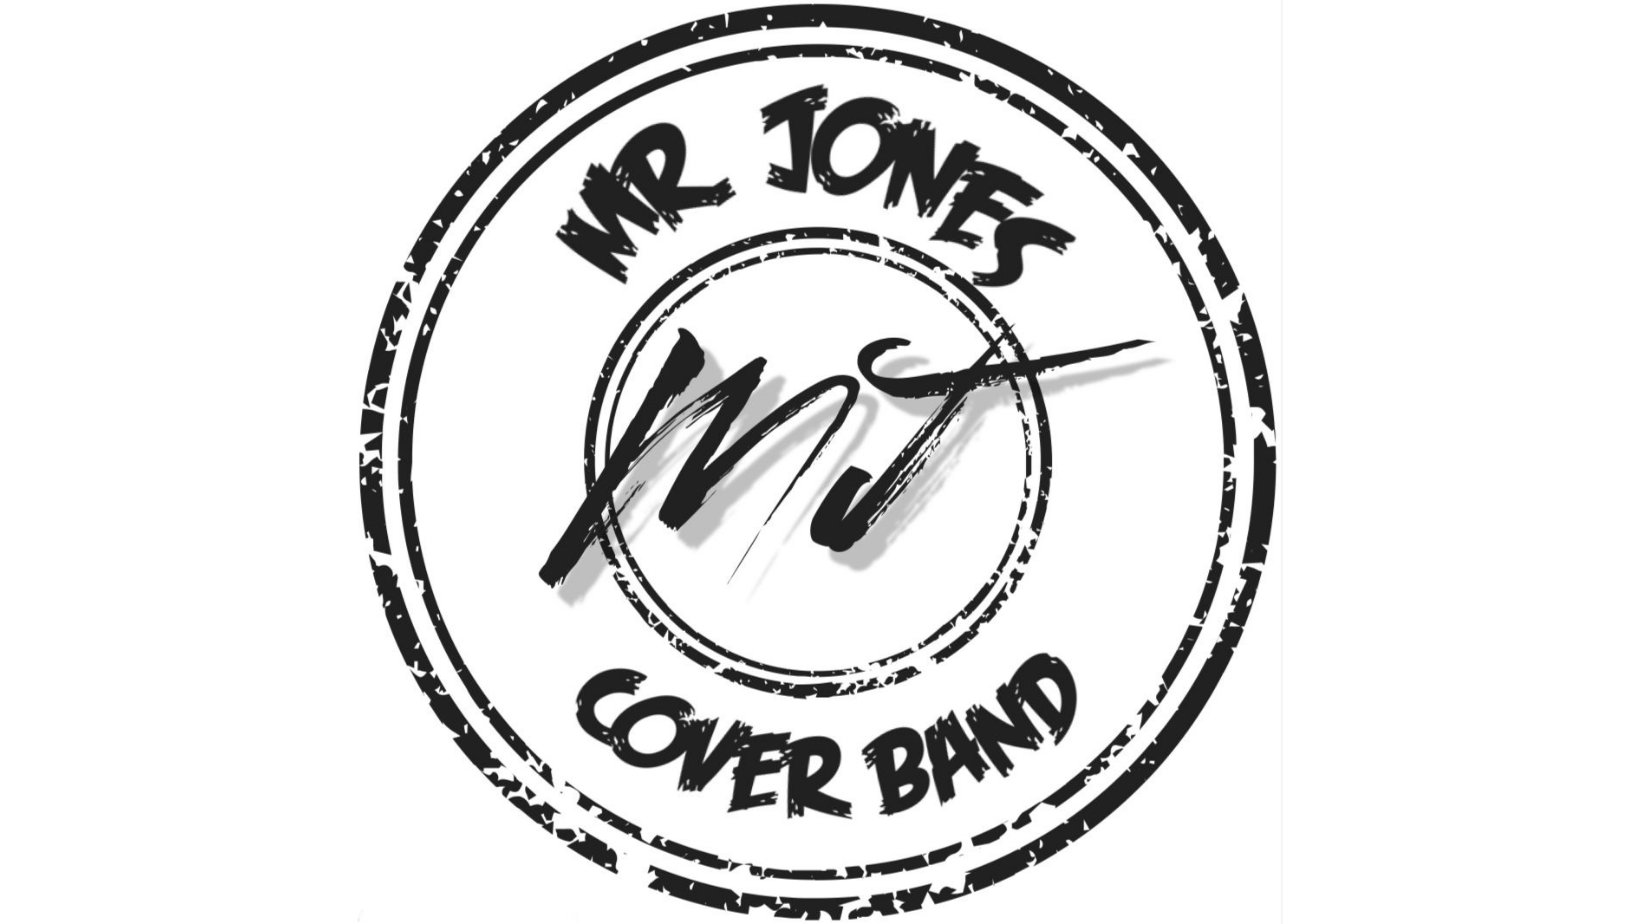 Mr Jones cover band